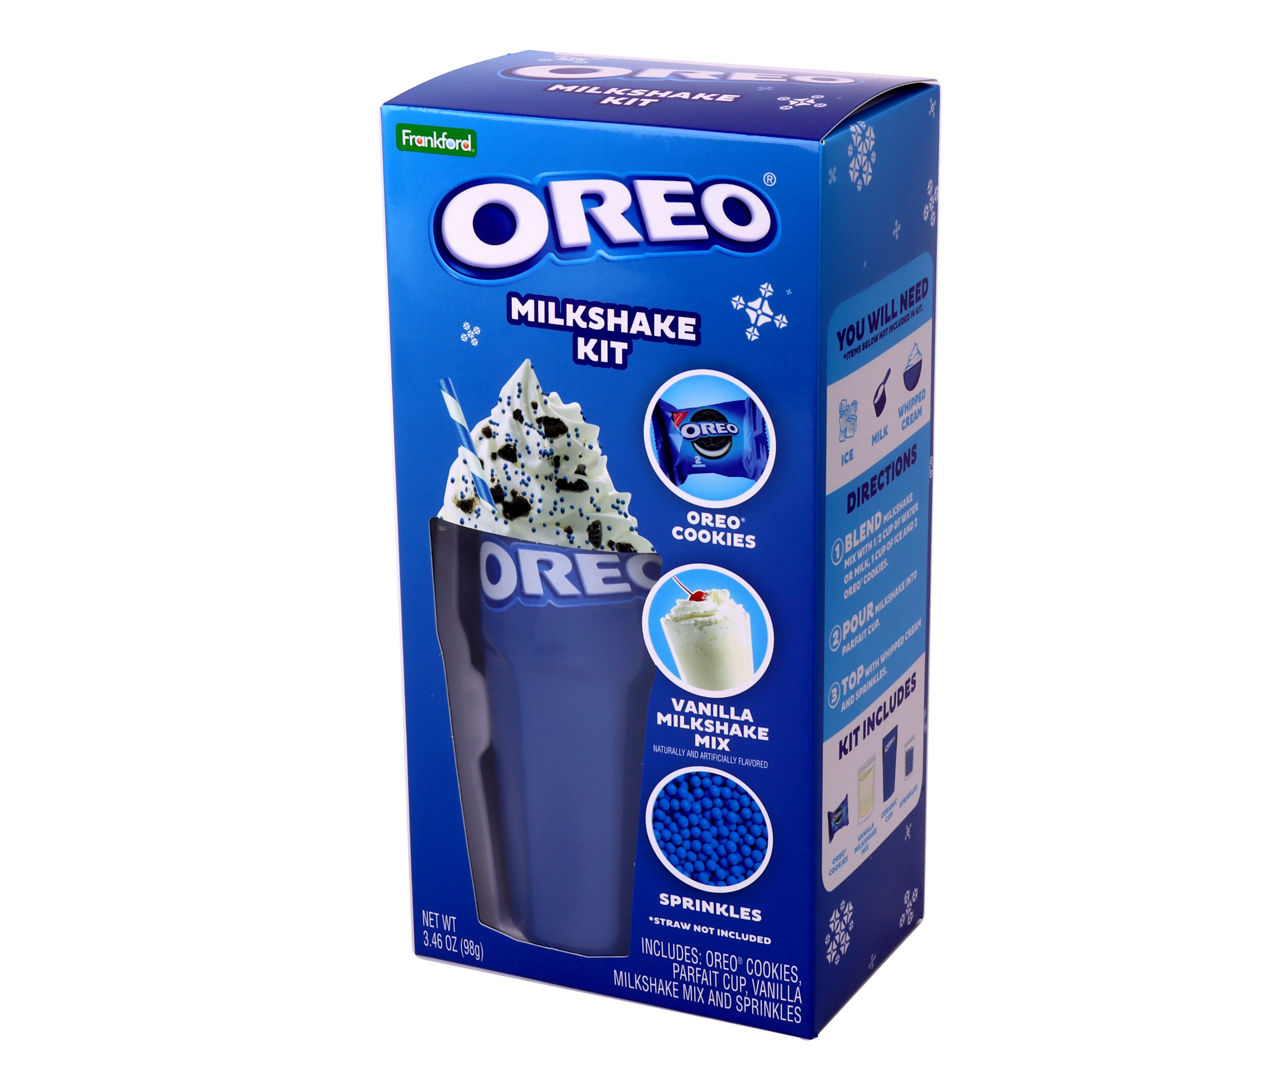  Frankford OREO Milkshake Gift Set with OREO Cookies